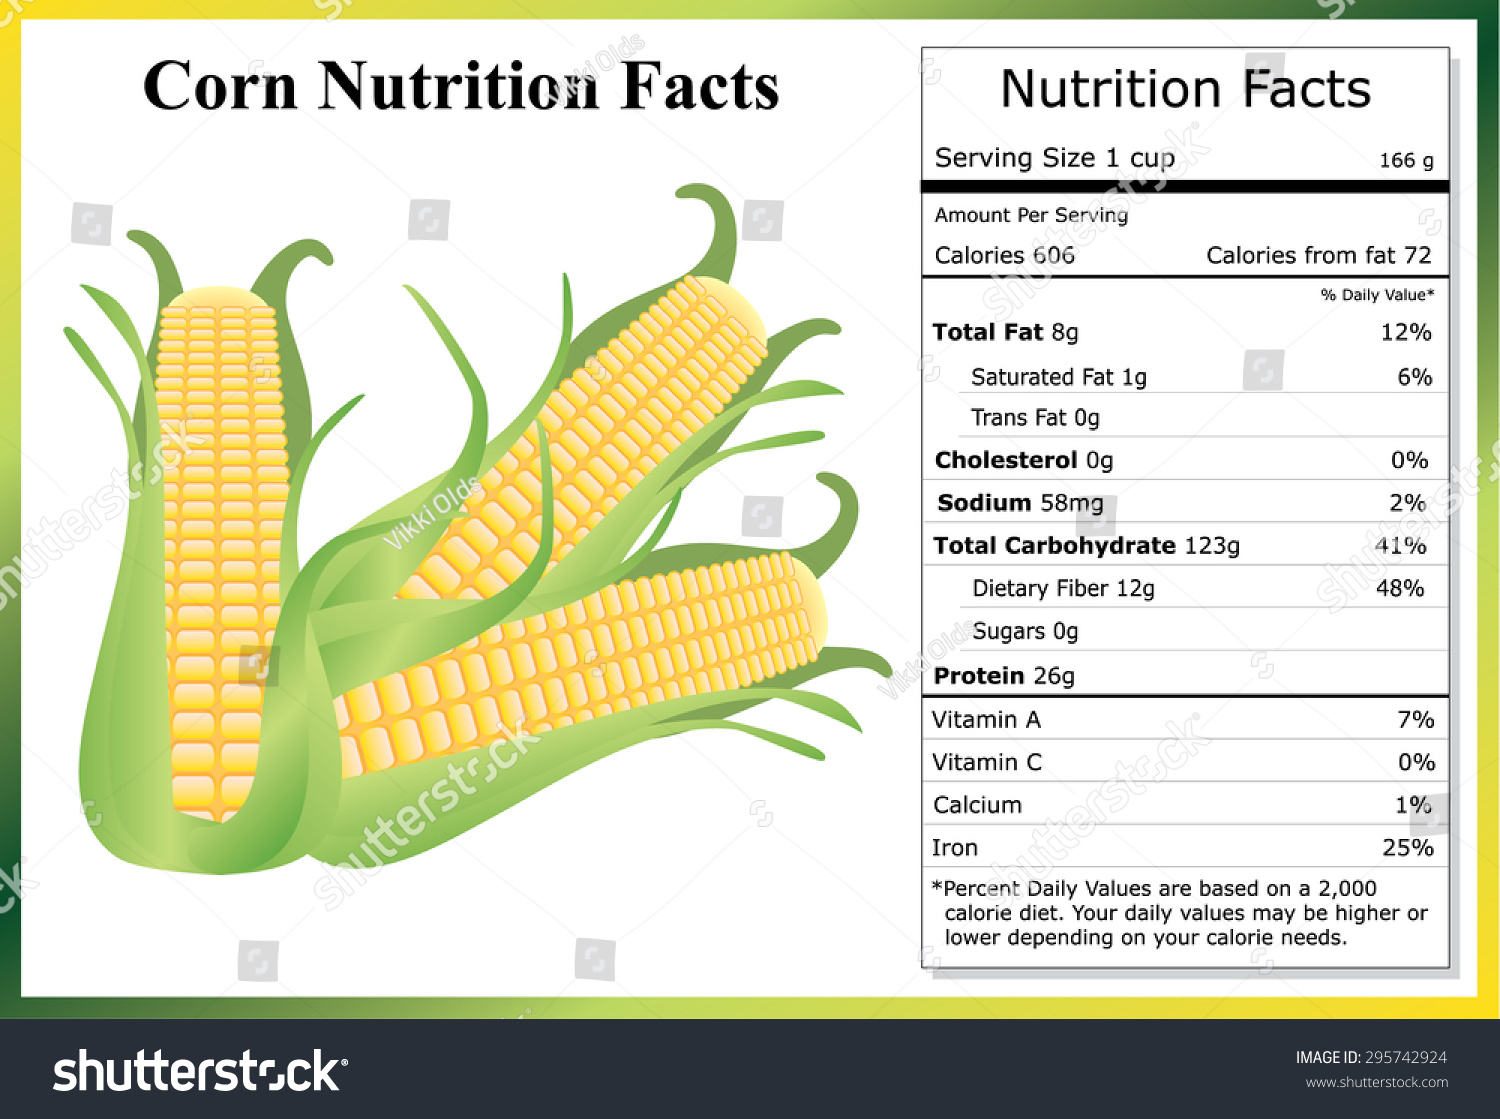 Analyzing corn strip trials